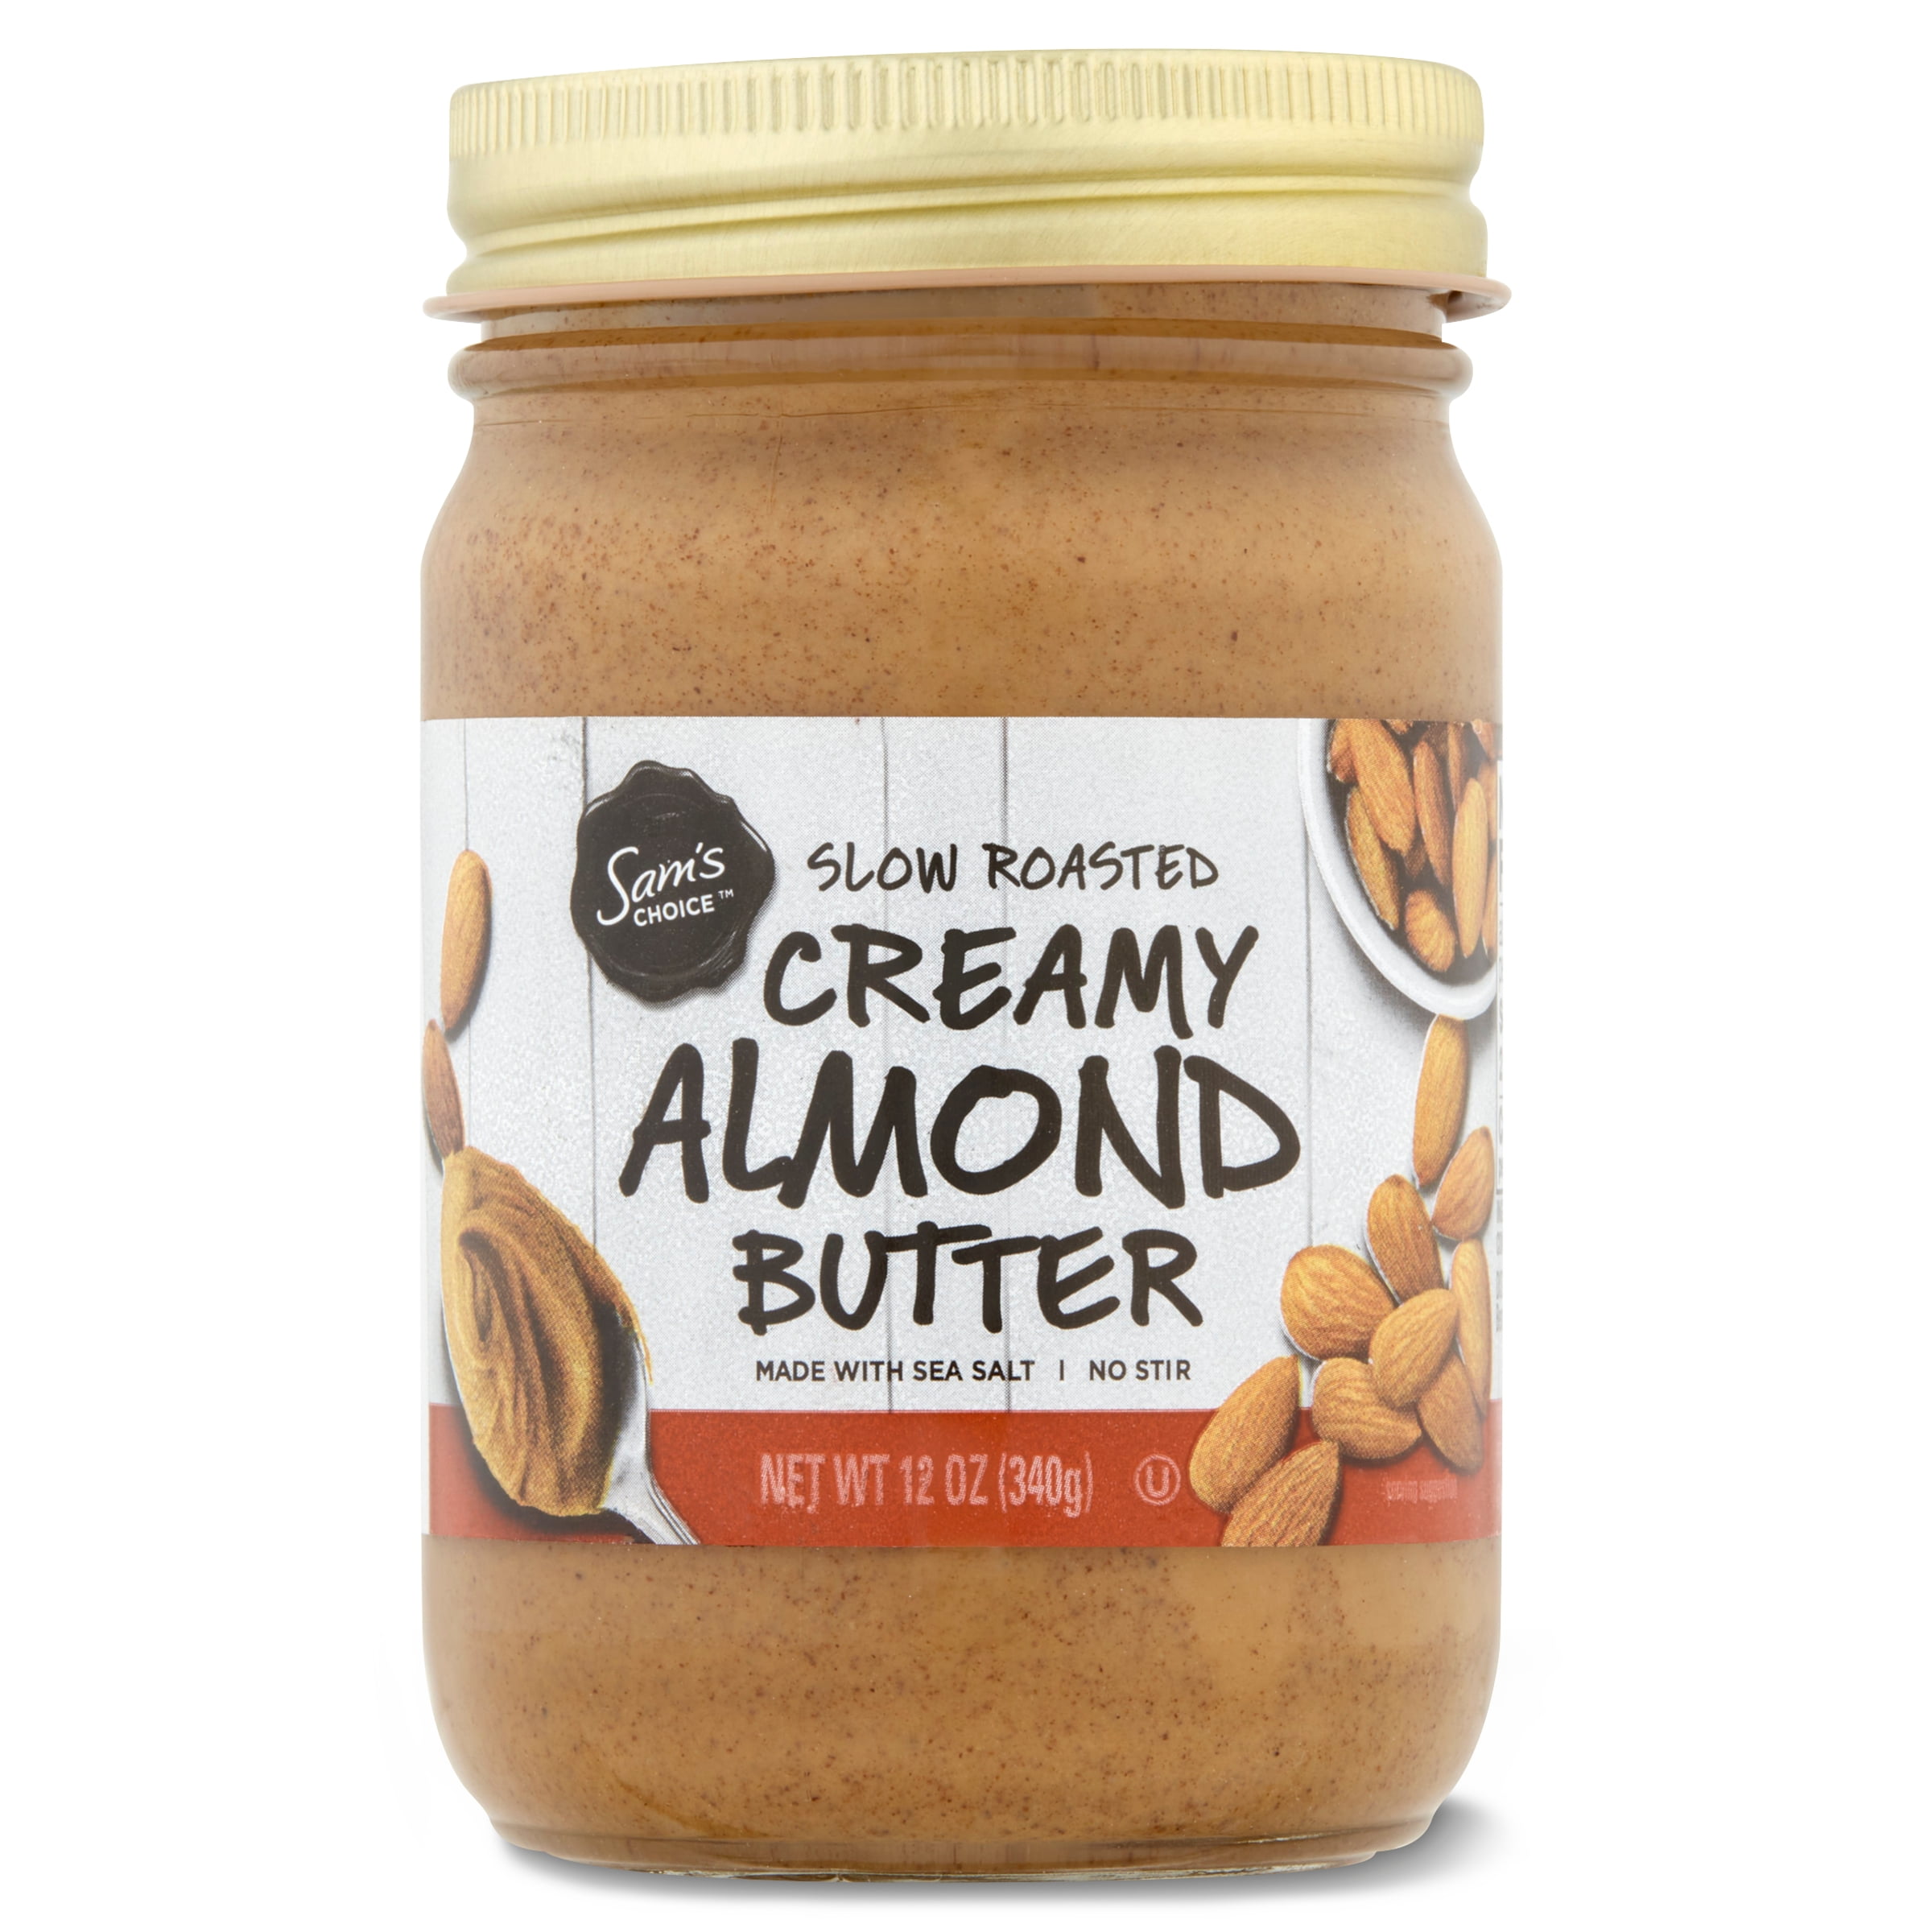 Sam's Choice Slow Roasted Creamy Almond Butter, 12 oz